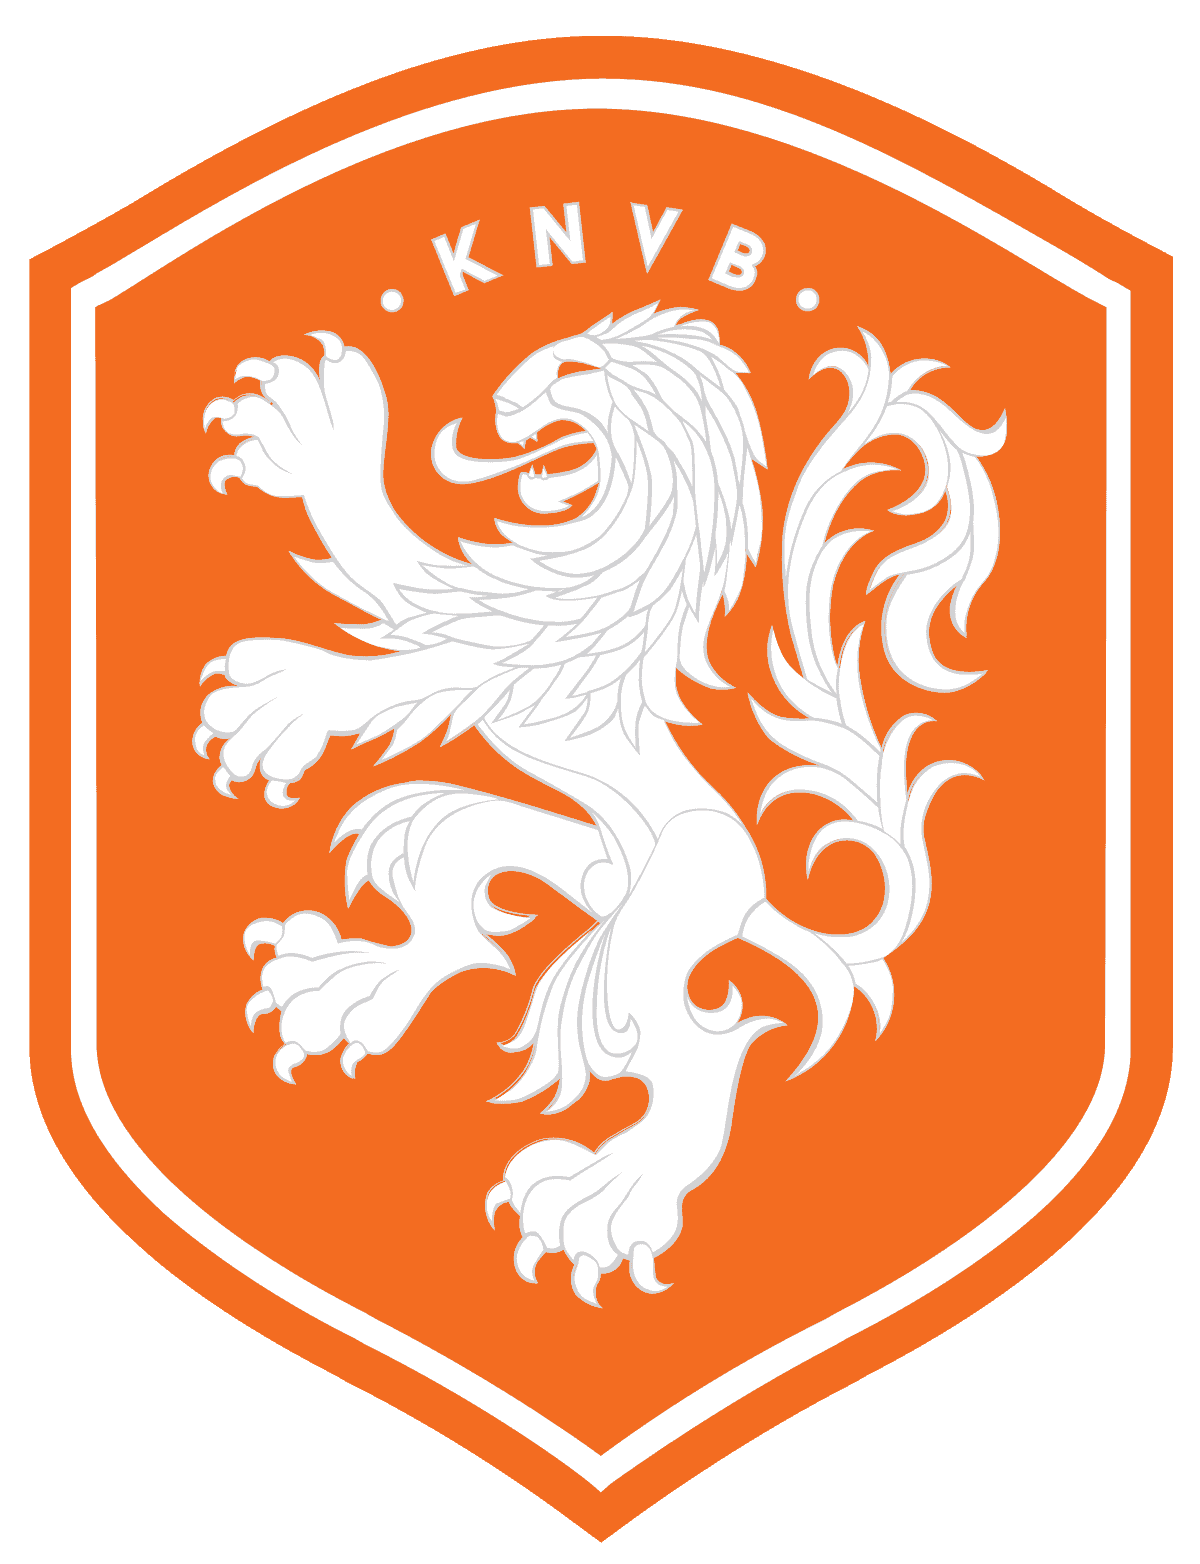 Netherlands National Football Team Logo